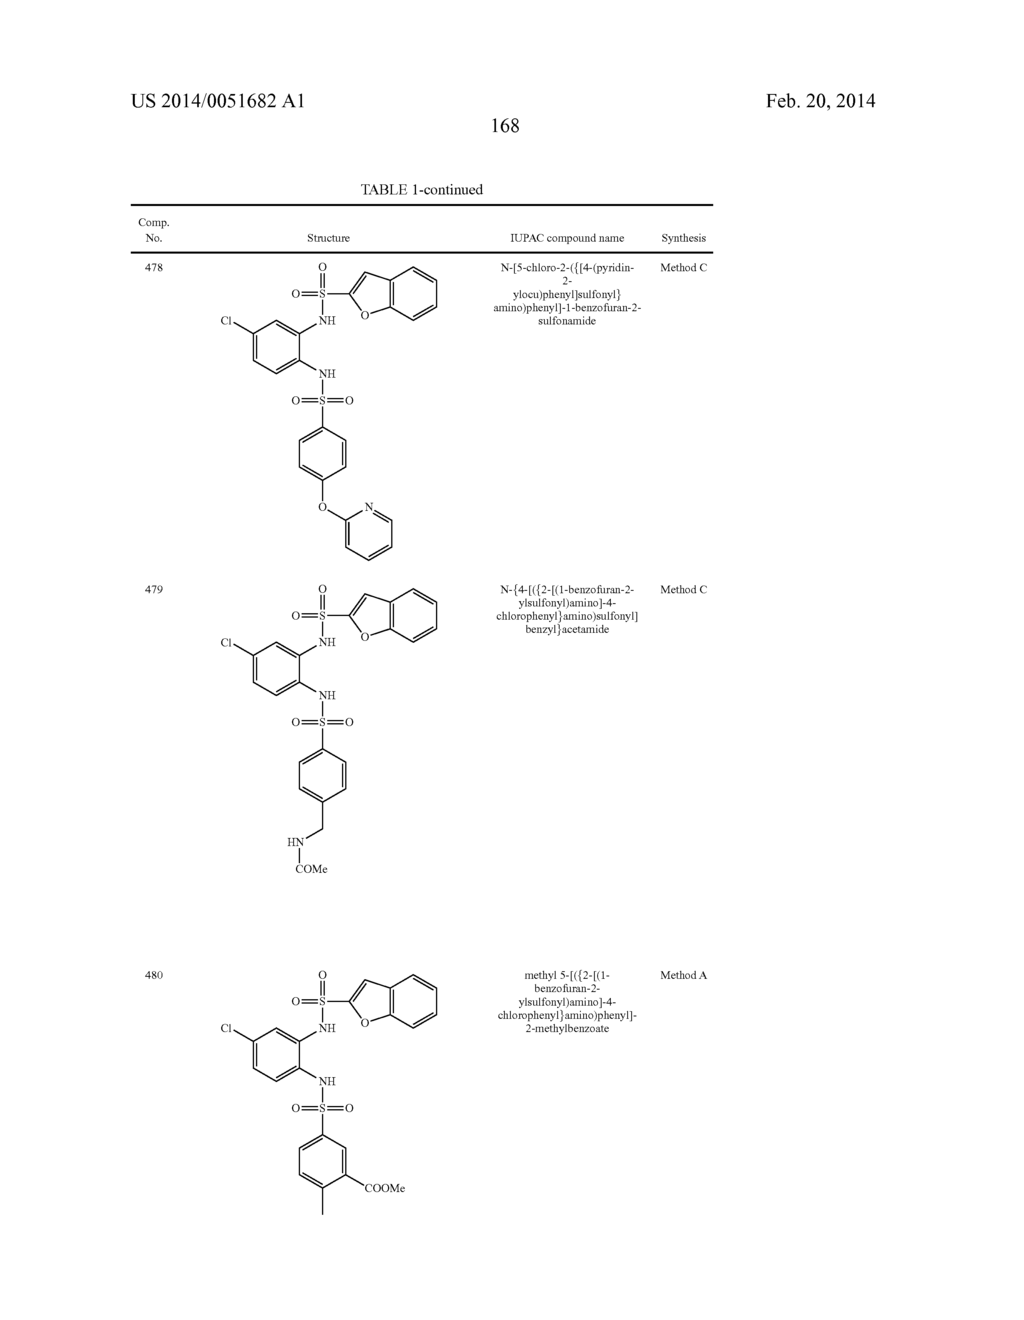 NOVEL 1,2- BIS-SULFONAMIDE DERIVATIVES AS CHEMOKINE RECEPTOR MODULATORS - diagram, schematic, and image 169